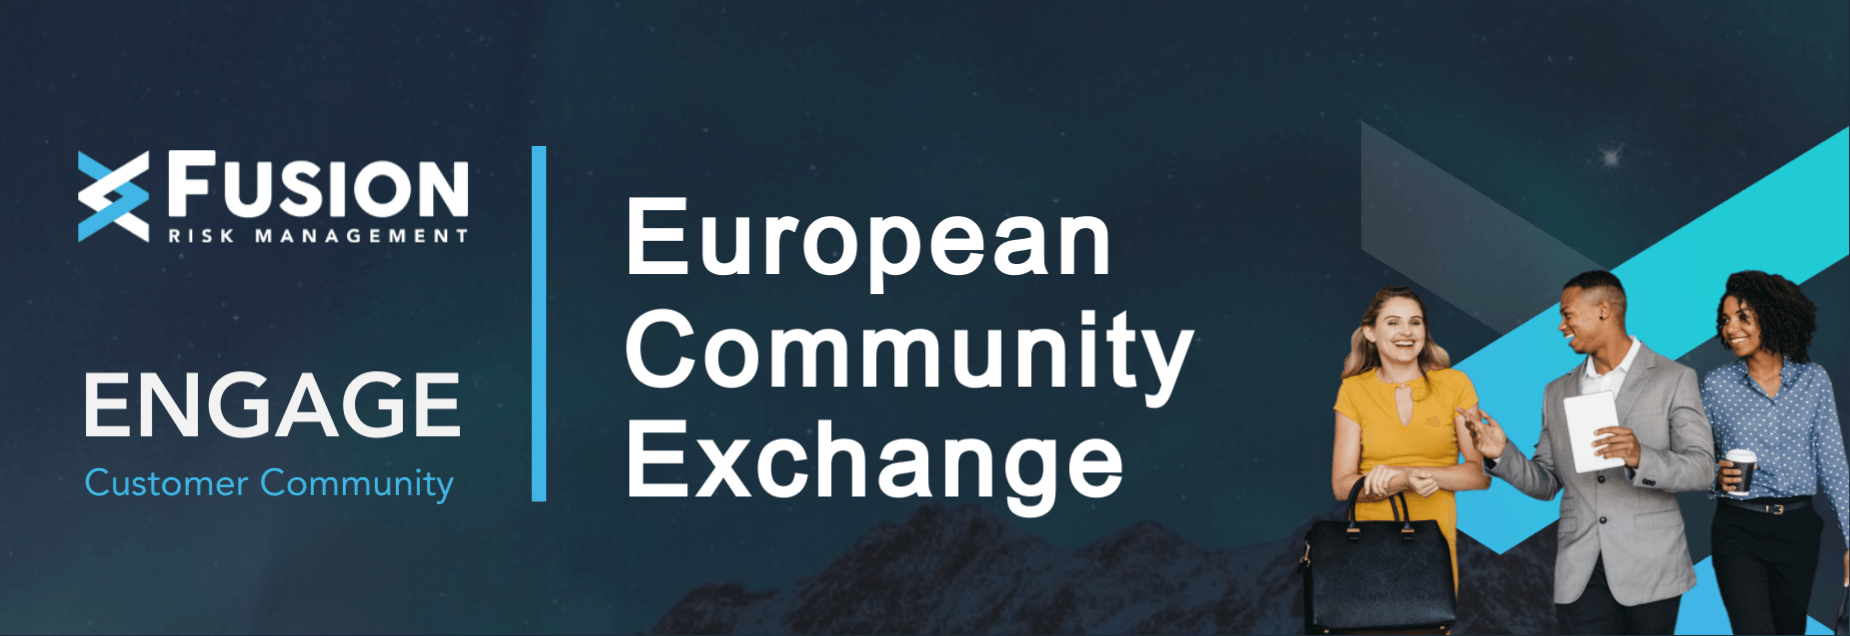 ENGAGE European Community Exchange Zoom Banner